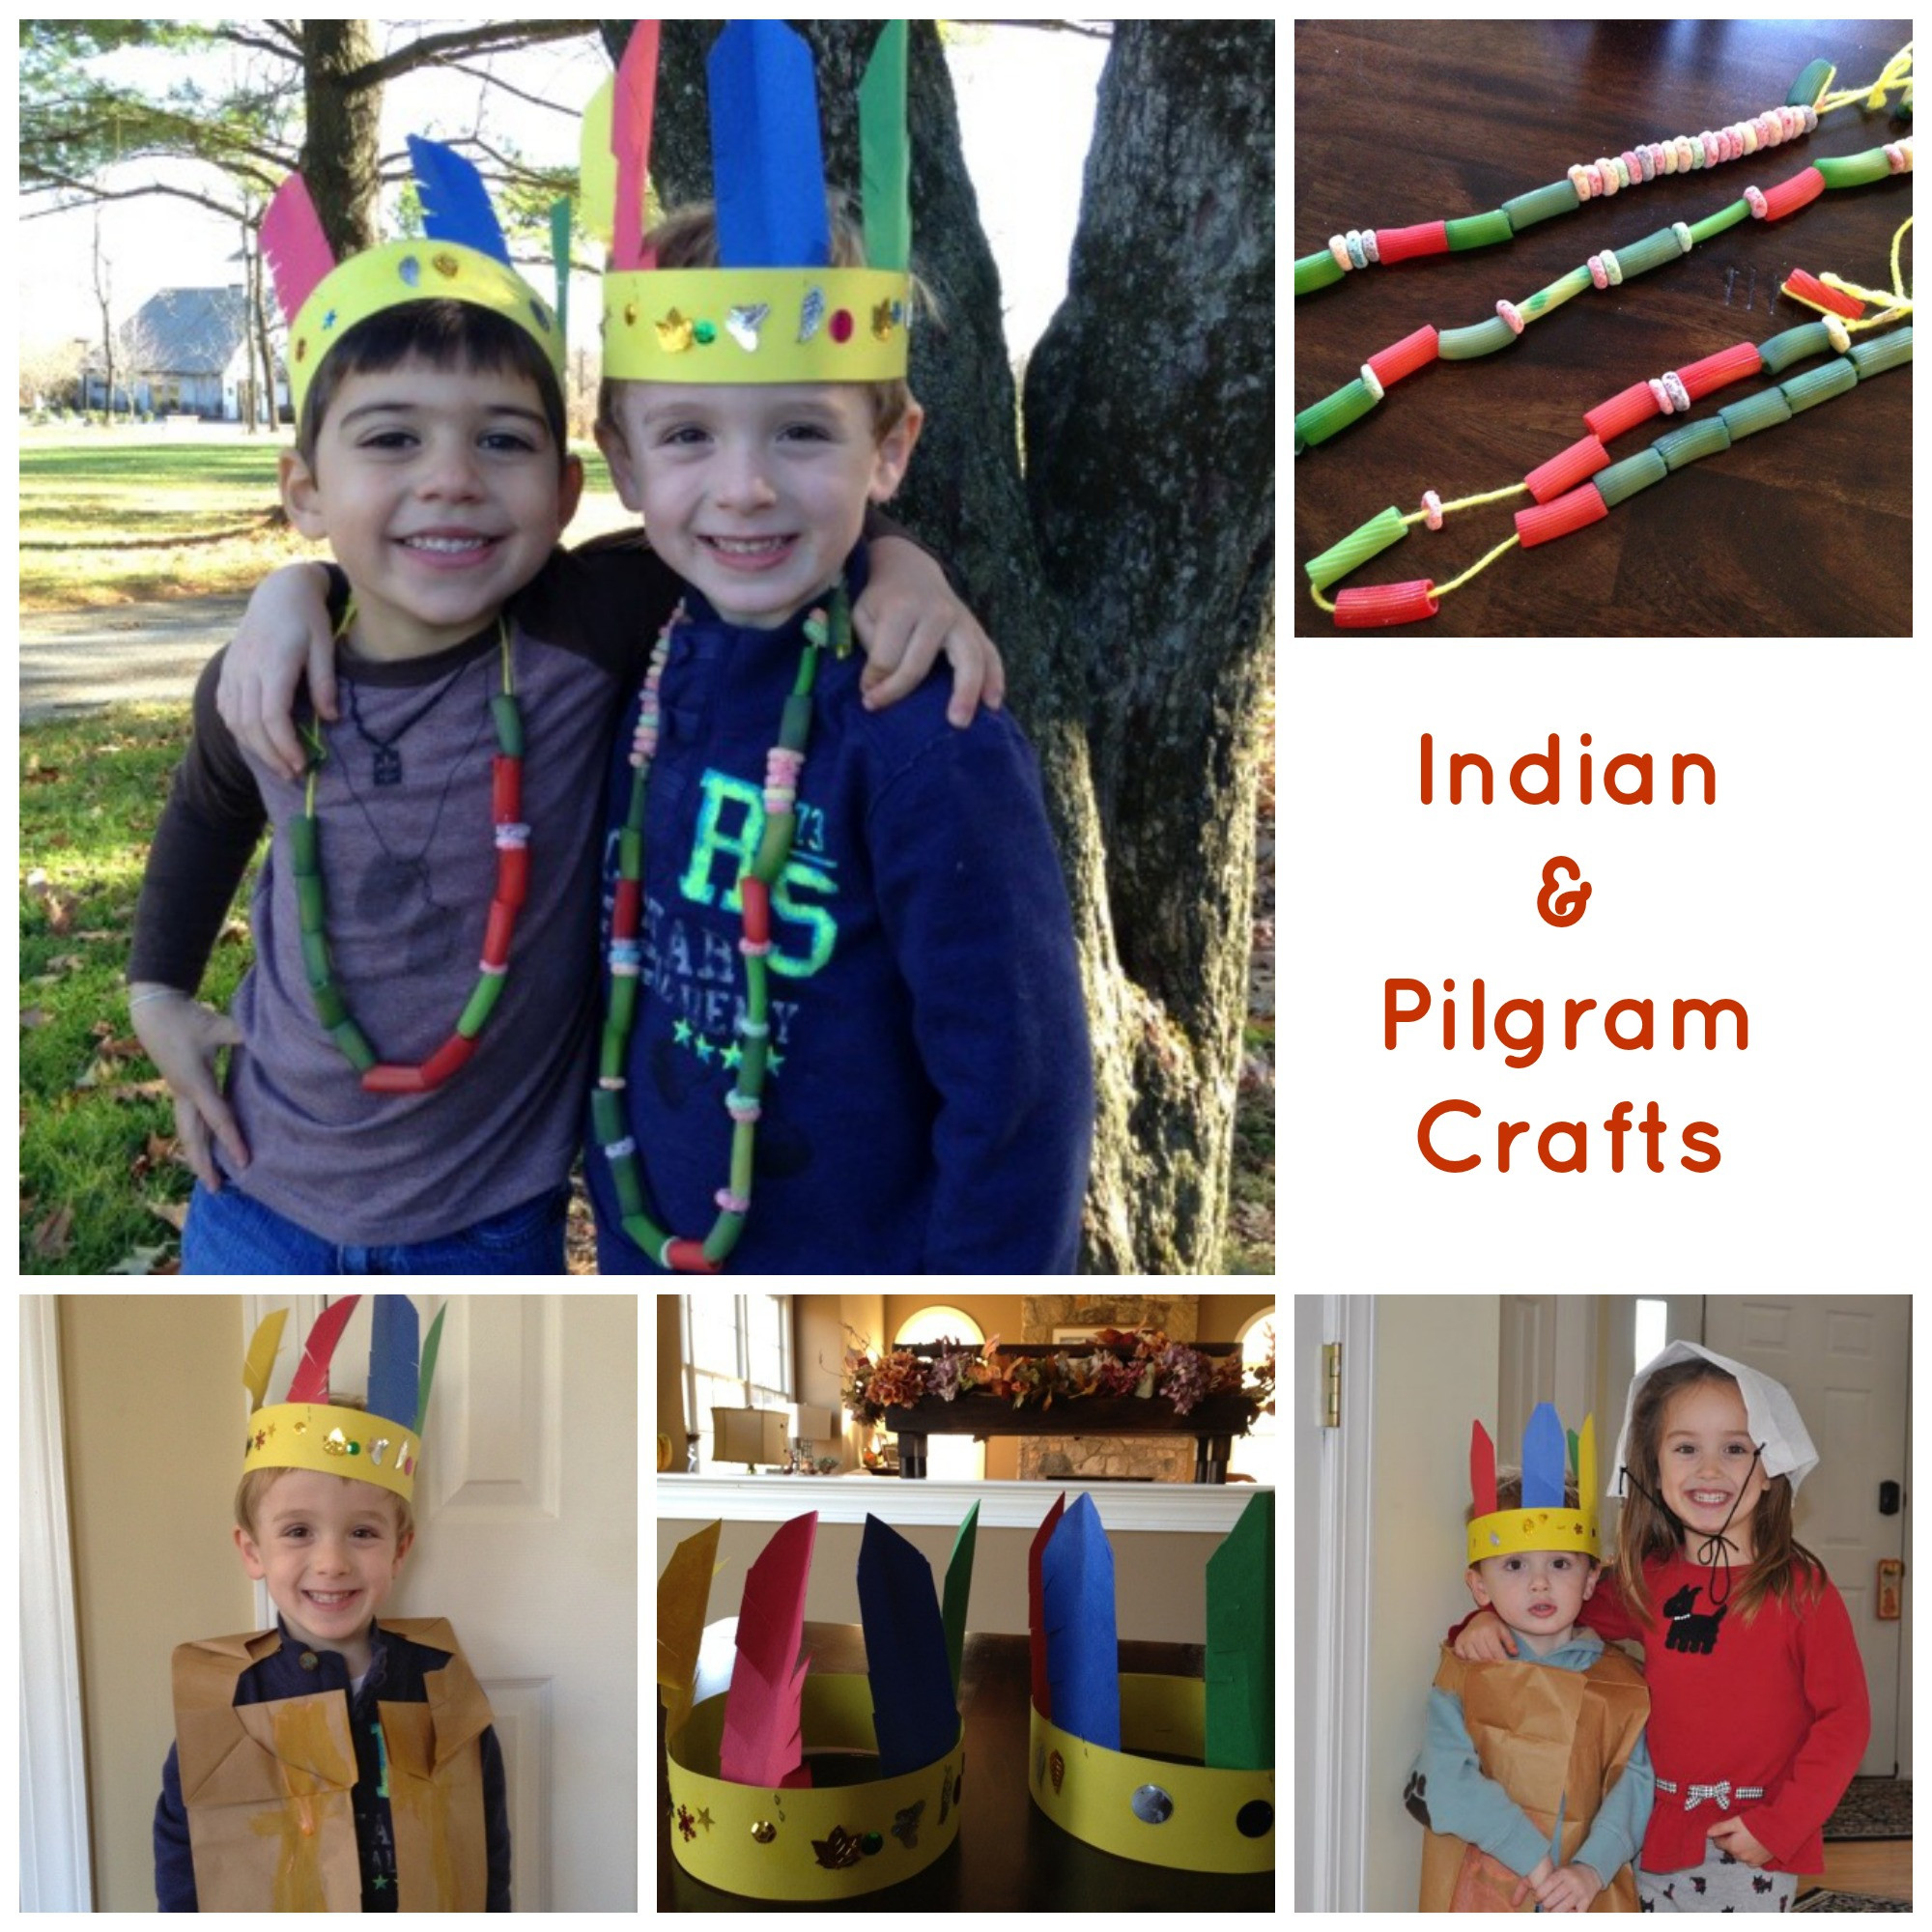 DIY Pilgrim Costume
 Easy Homemade Indian and Pilgrim Crafts for Kids Classy